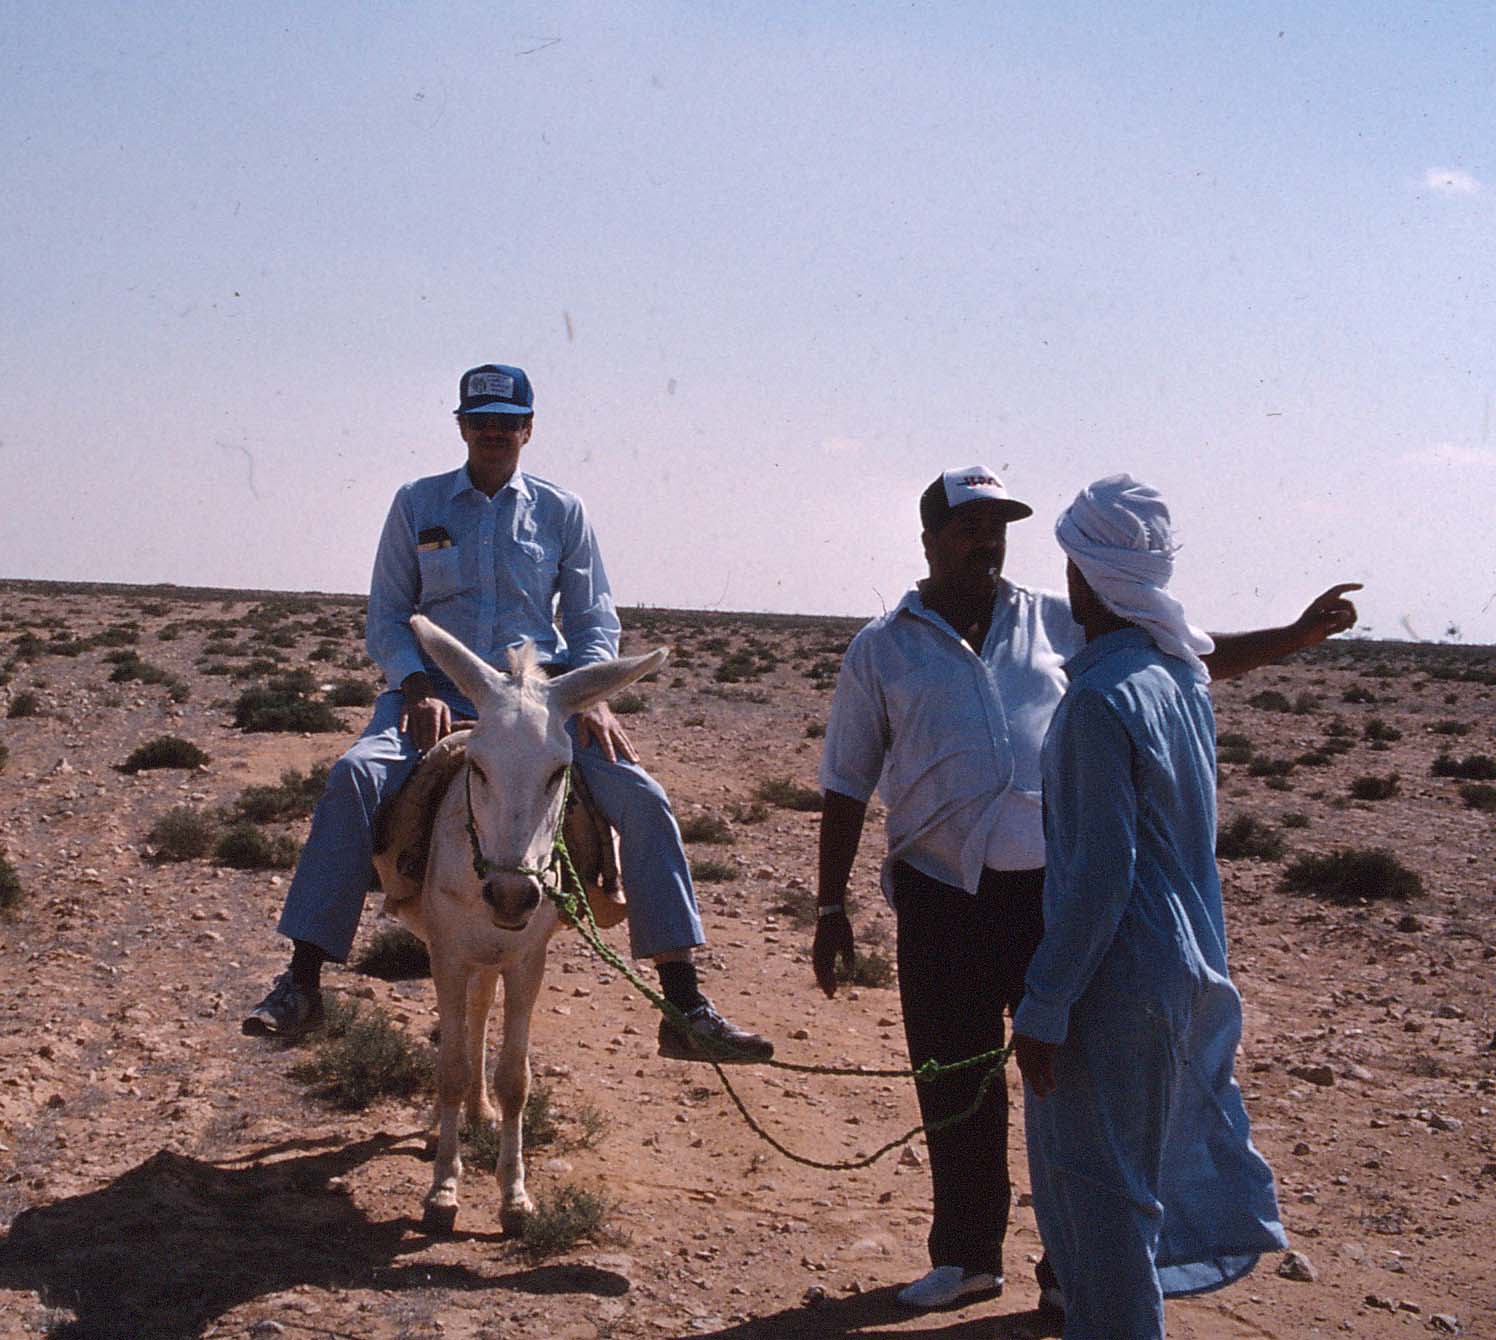 TheKnowmad riding a donkey in the Sahara Desert near Fuka Egypt